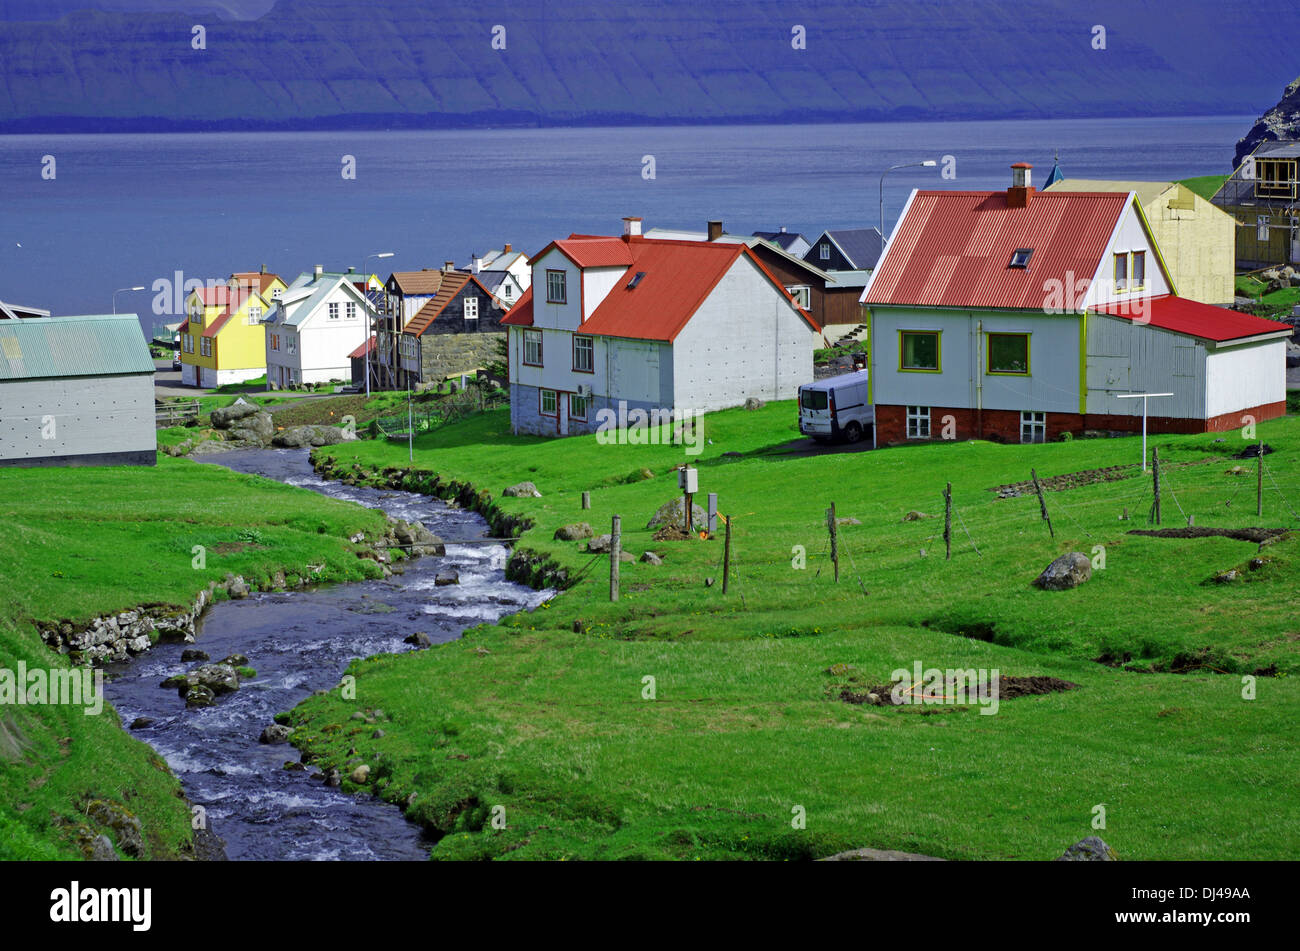 Remoted Village on Färöer islands Stock Photo